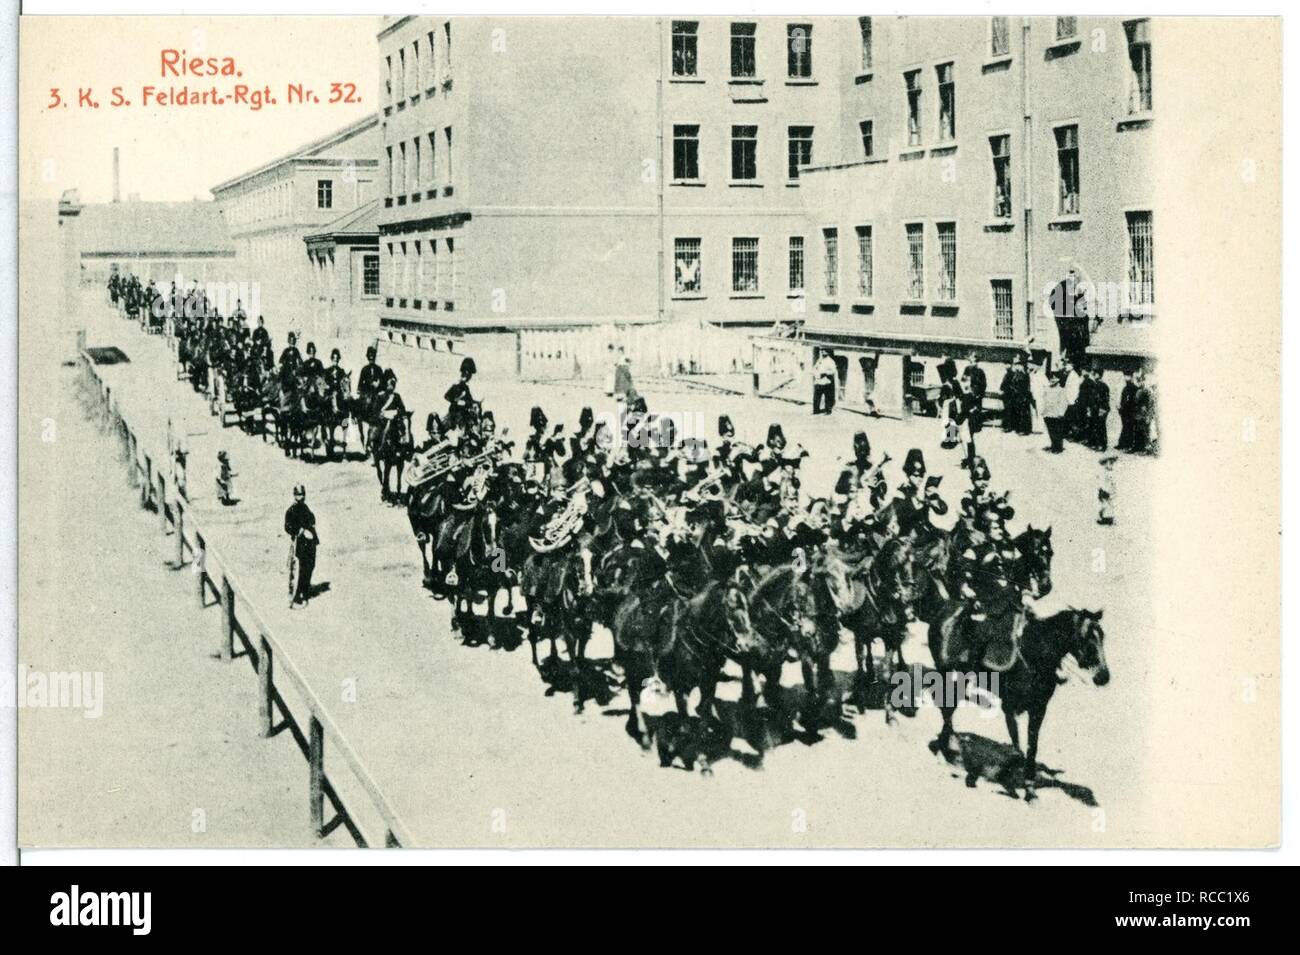 11758-Riesa-1910-3. Königlich Saxon Feldartillerie-Regiment Nr. 32- Banque D'Images